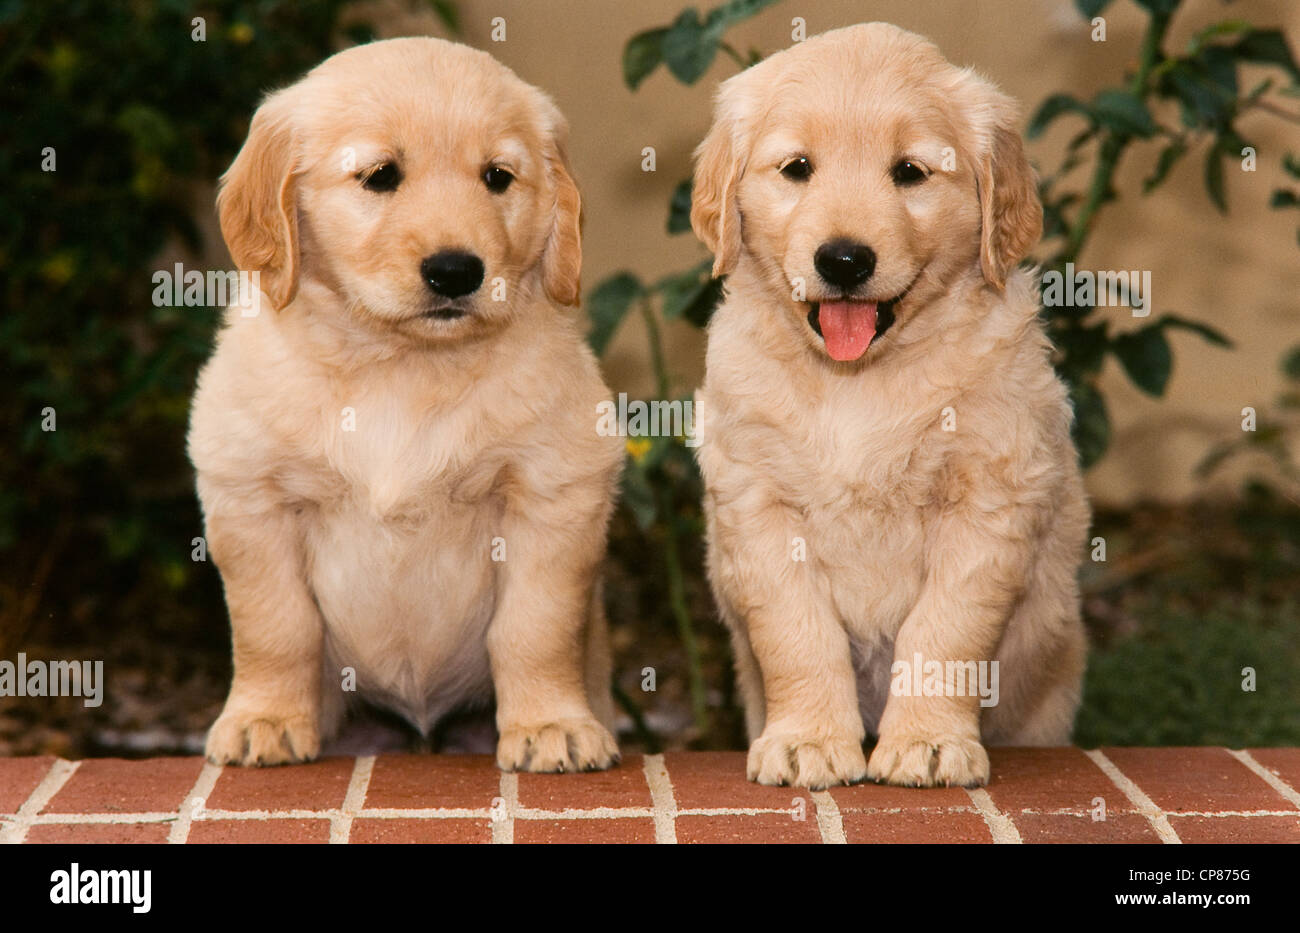 Two Golden retriever puppies on brick ledge Stock Photo